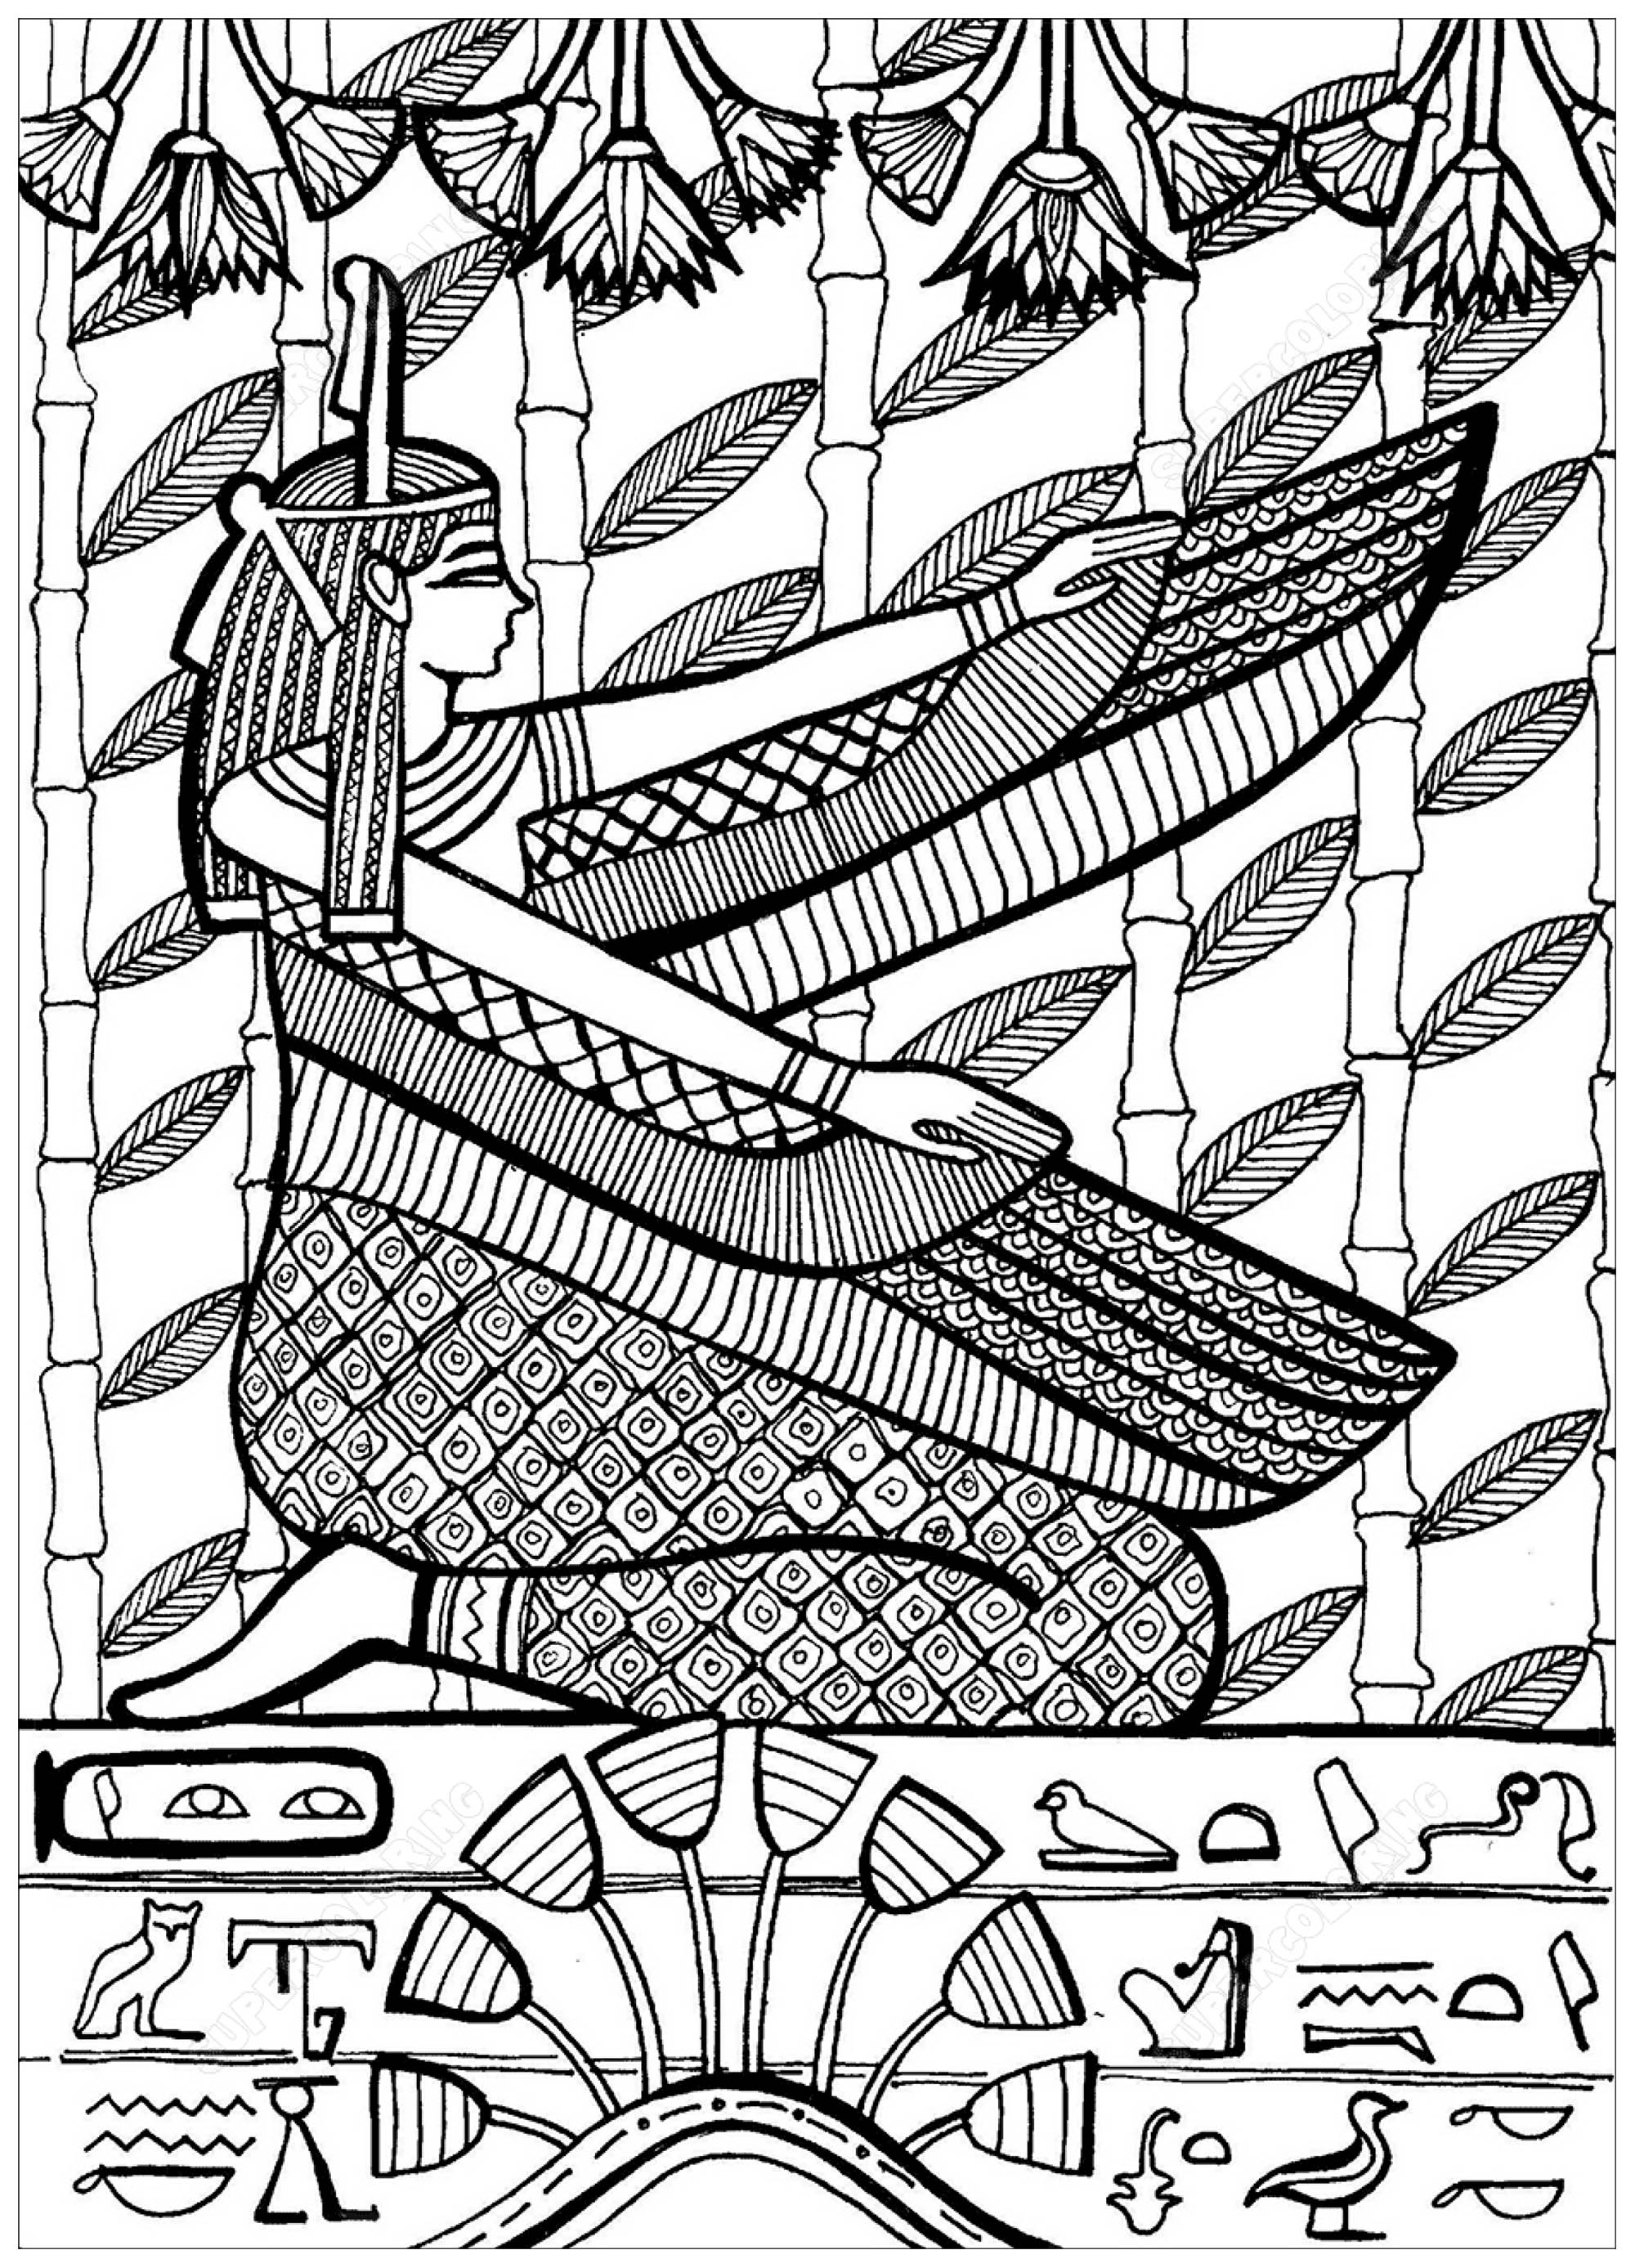 Sumo sacerdote de Ptah, o deus patrono dos artesãos, Artista : Krivosheeva Olga (Ori Akuma)   Fonte : Supercoloring